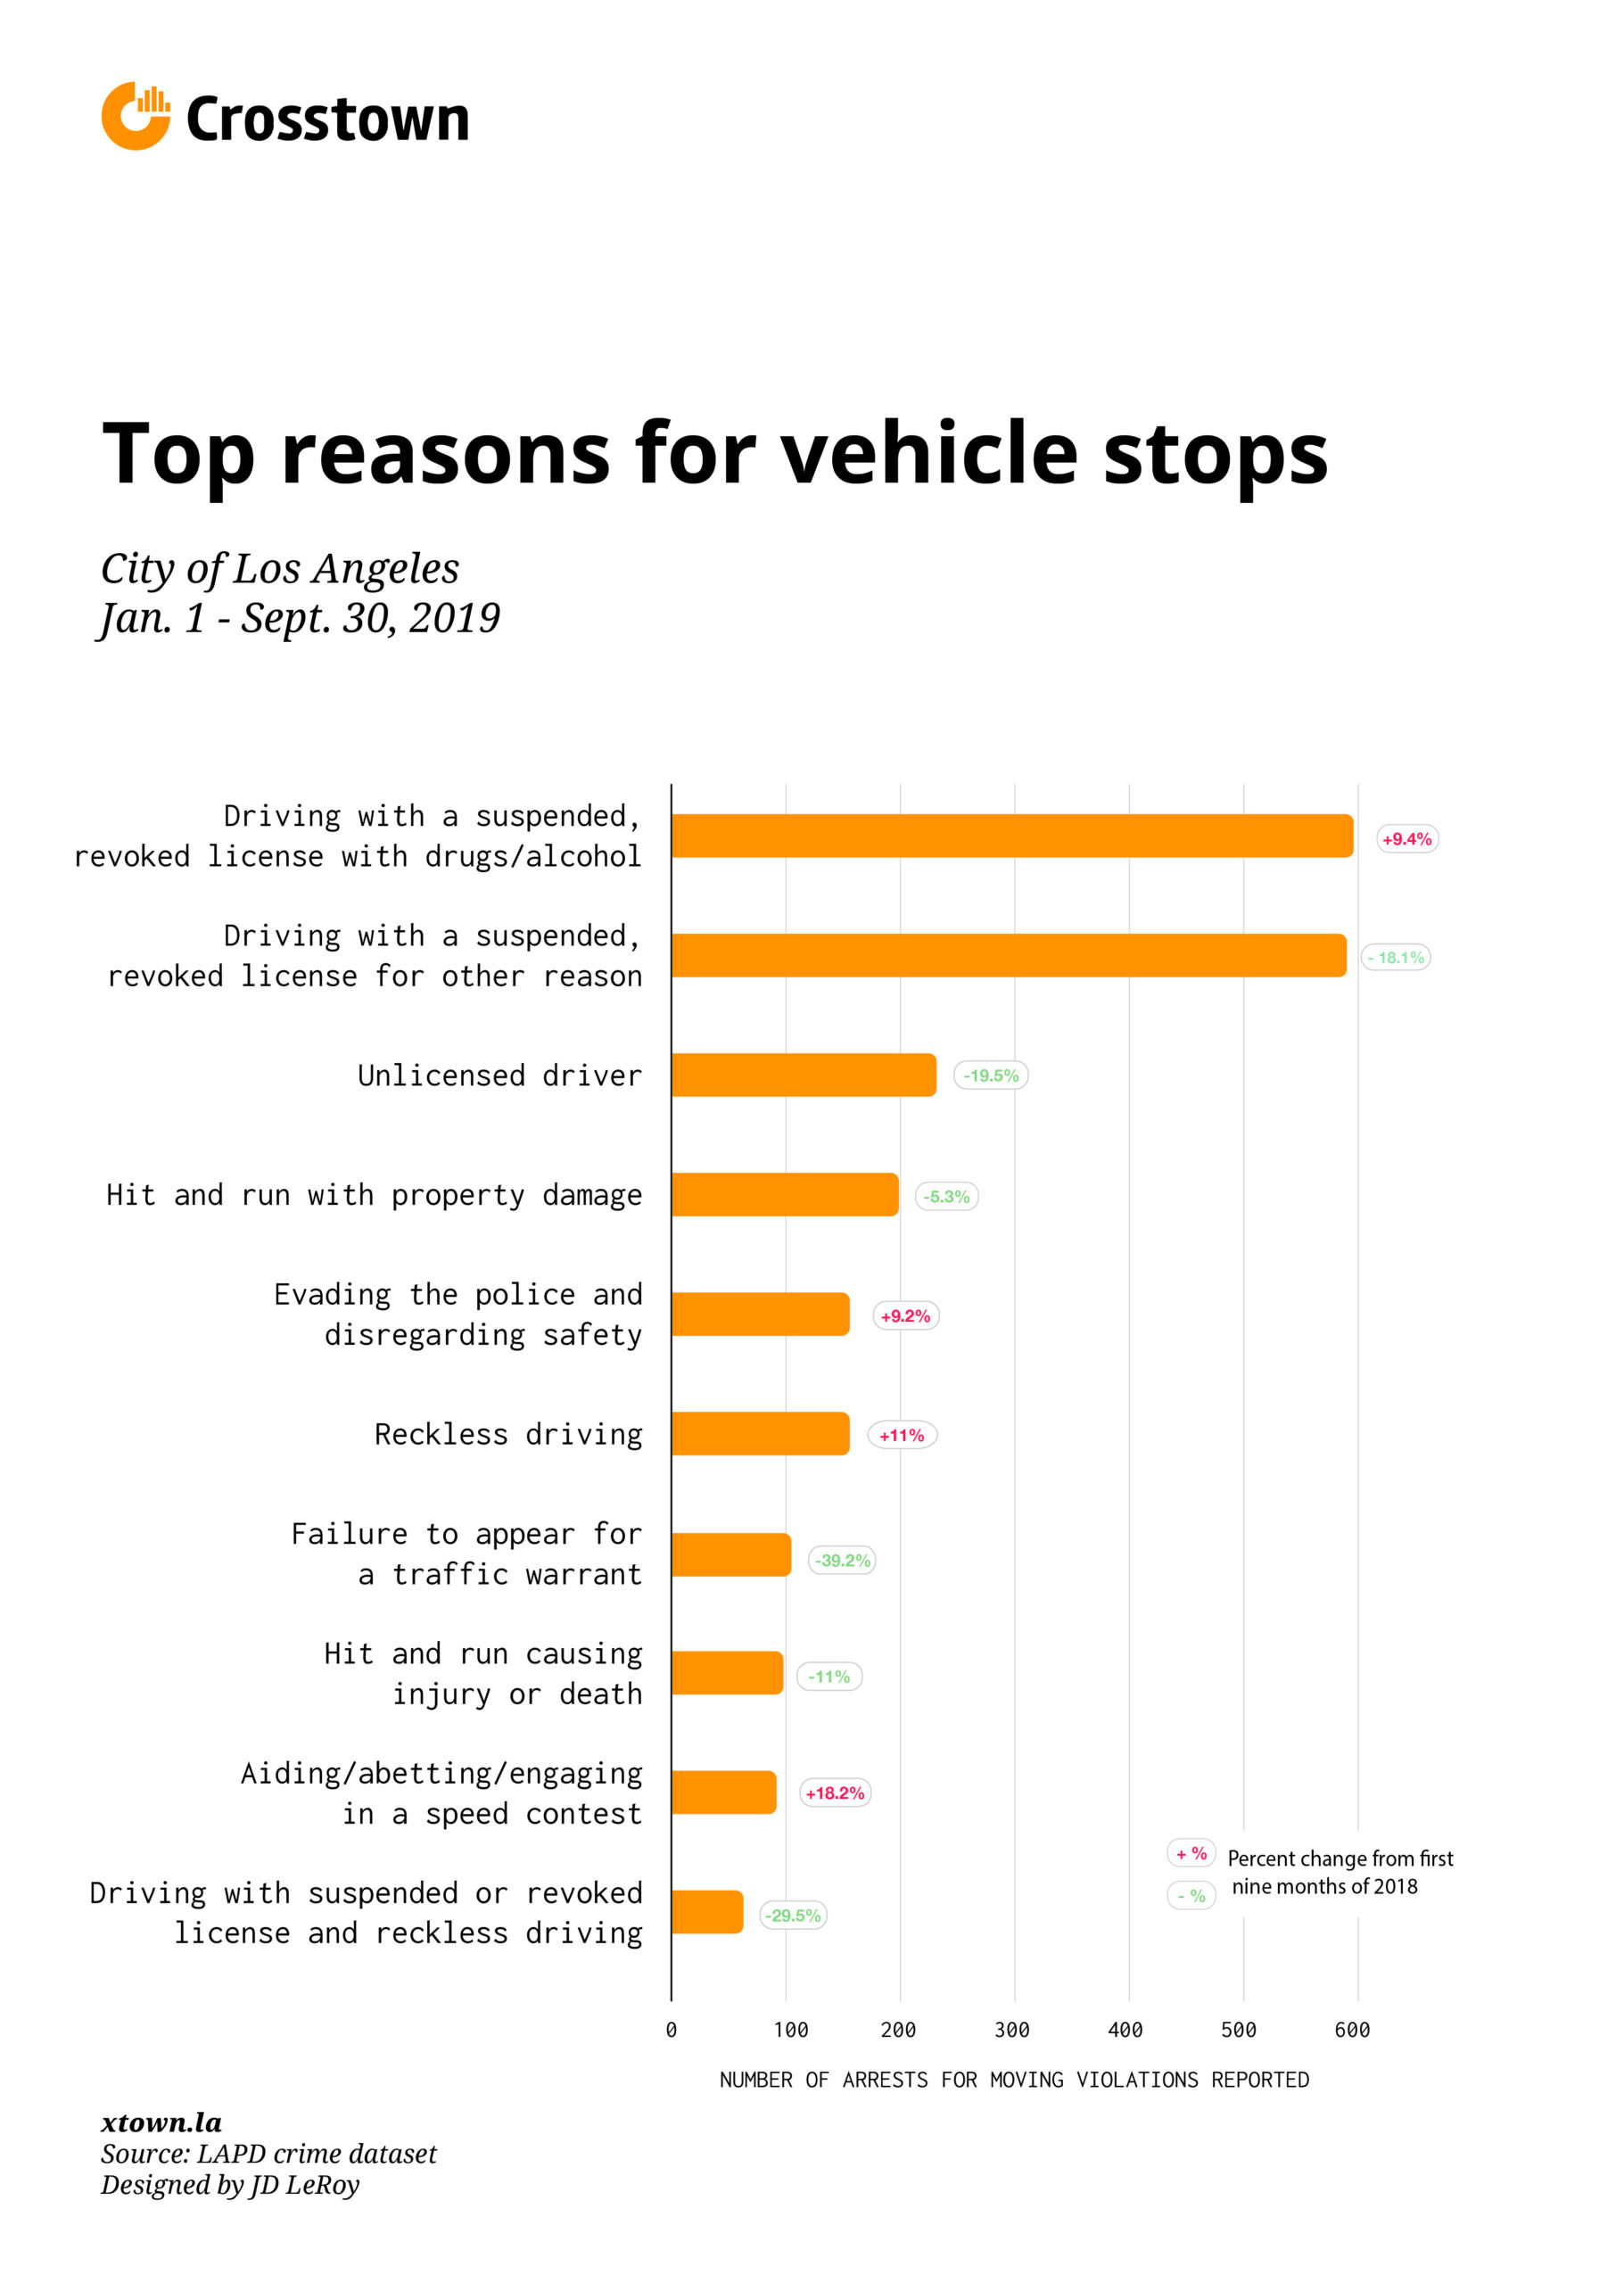 top reasons for vehicle stops bar graph